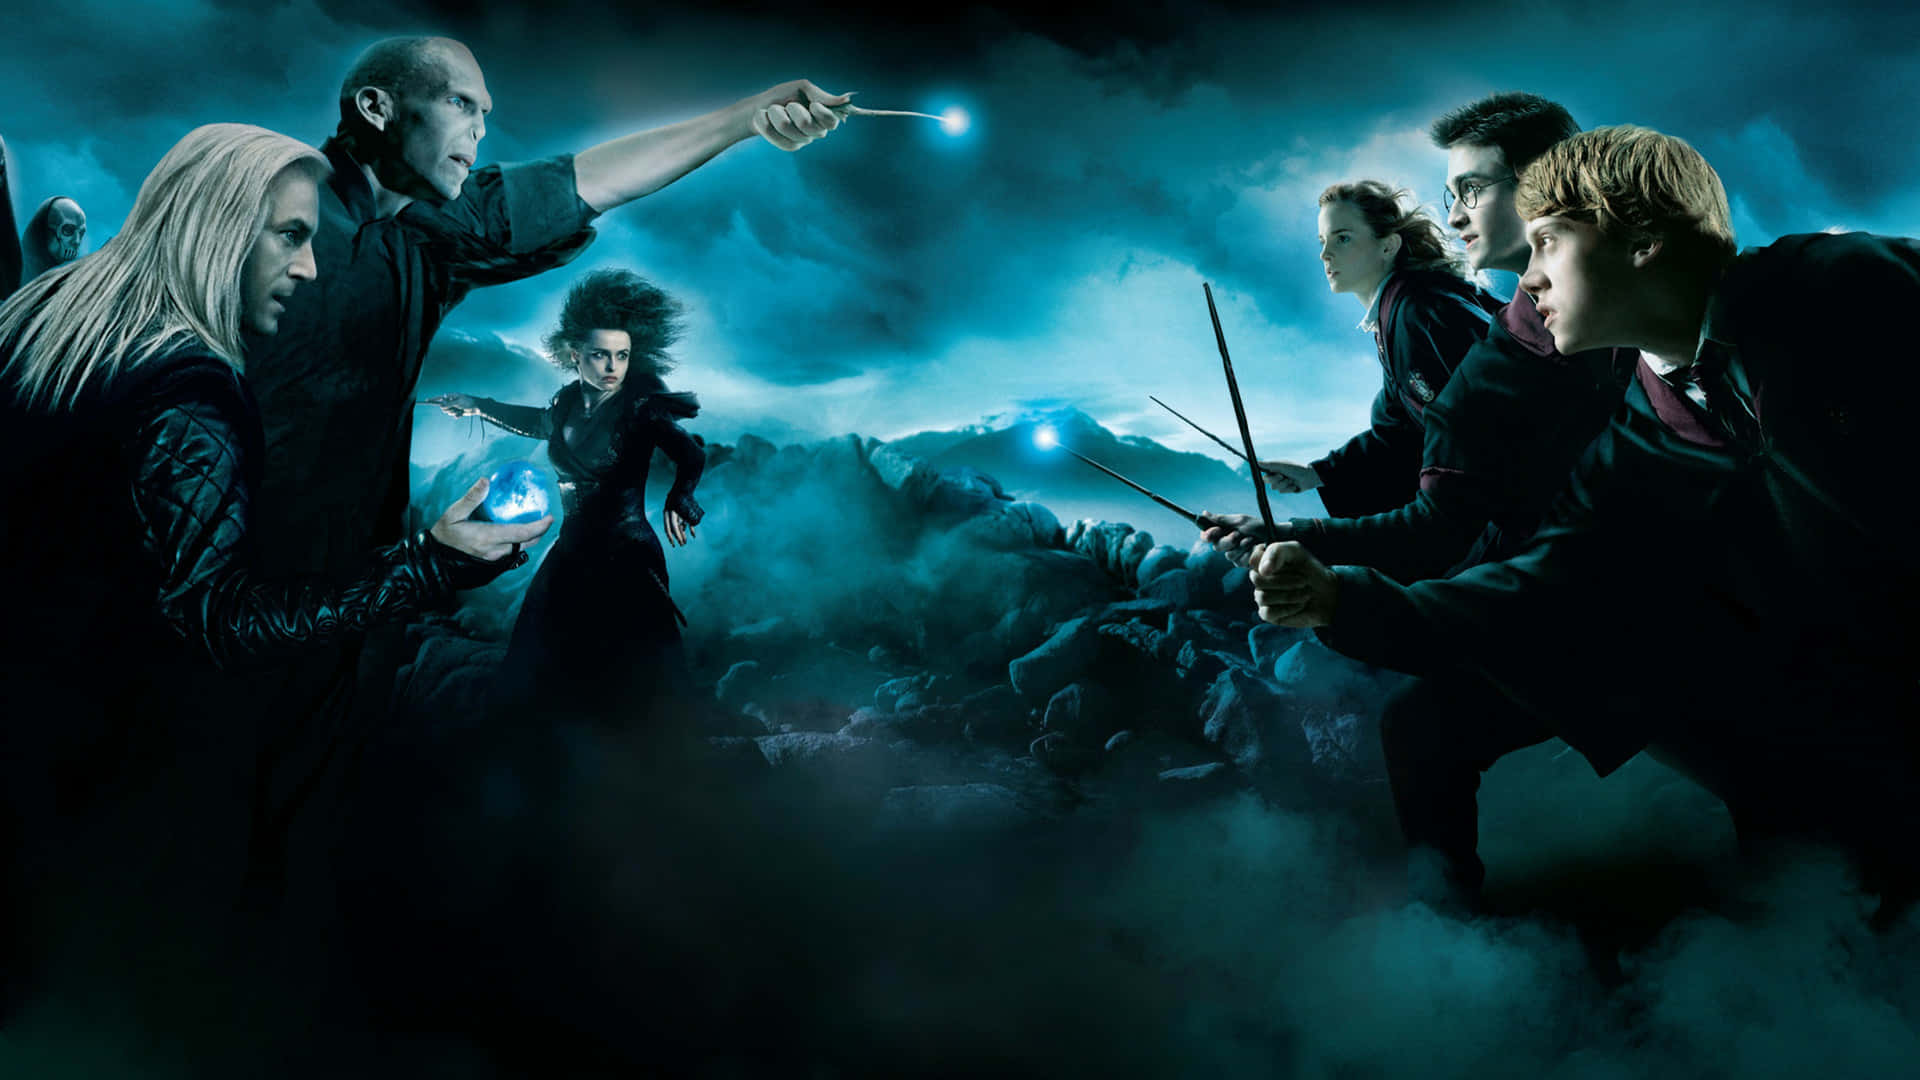 Hogwarts Magic Awaits in Harry Potter 4K Wallpaper